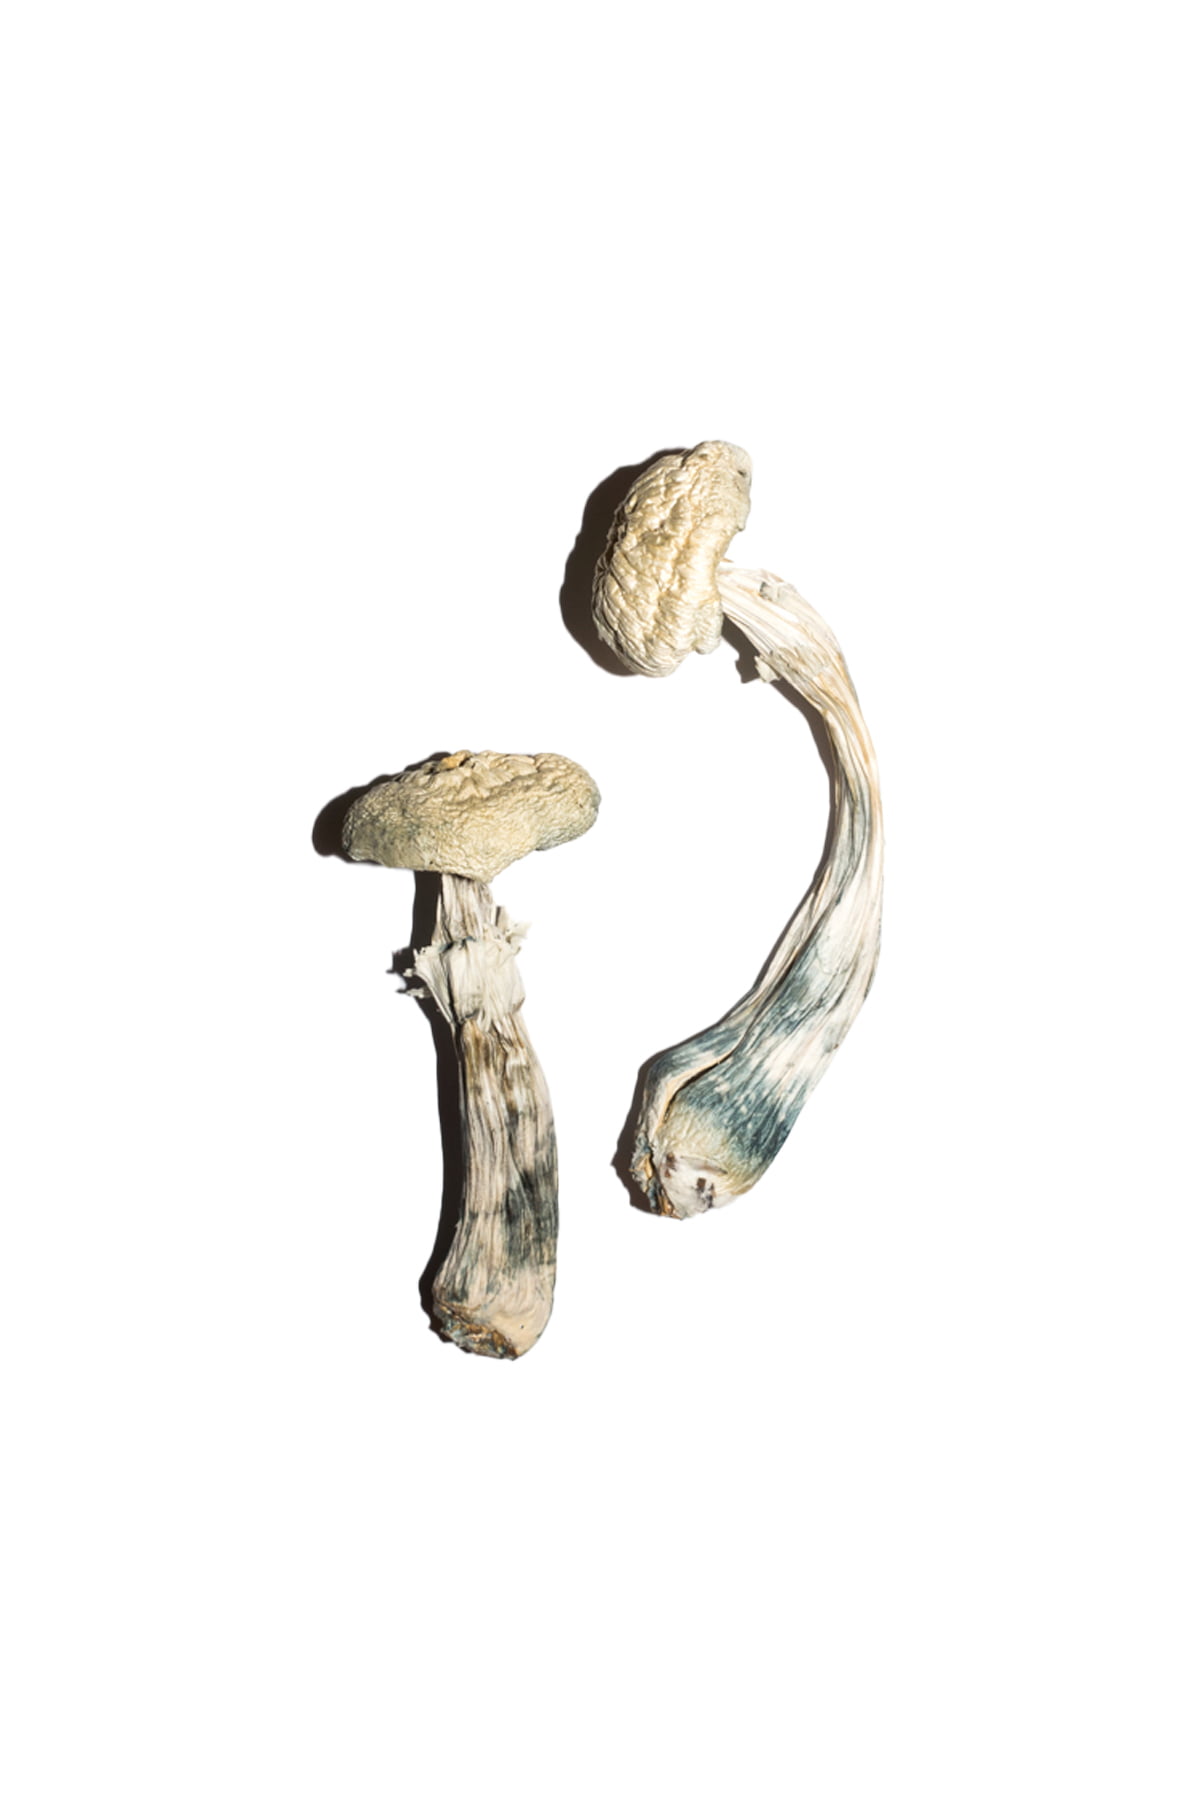 Buy Featured Special ‘Half Oz’ Magic Mushrooms (14 grams) online